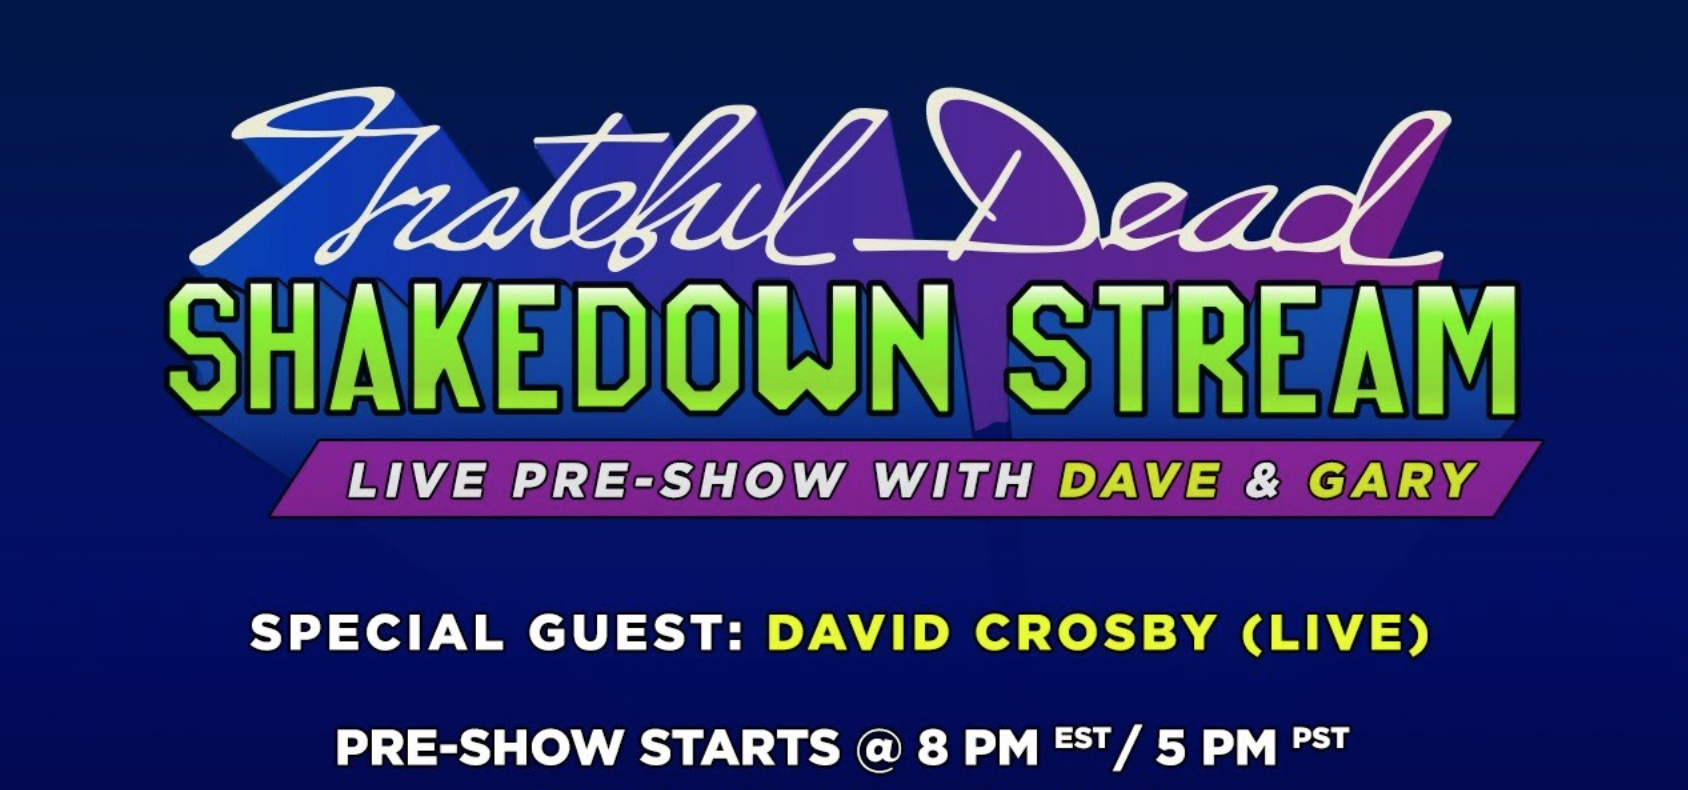 David Crosby To Join Grateful Dead’s ‘Shakedown Stream’ Pre-Show